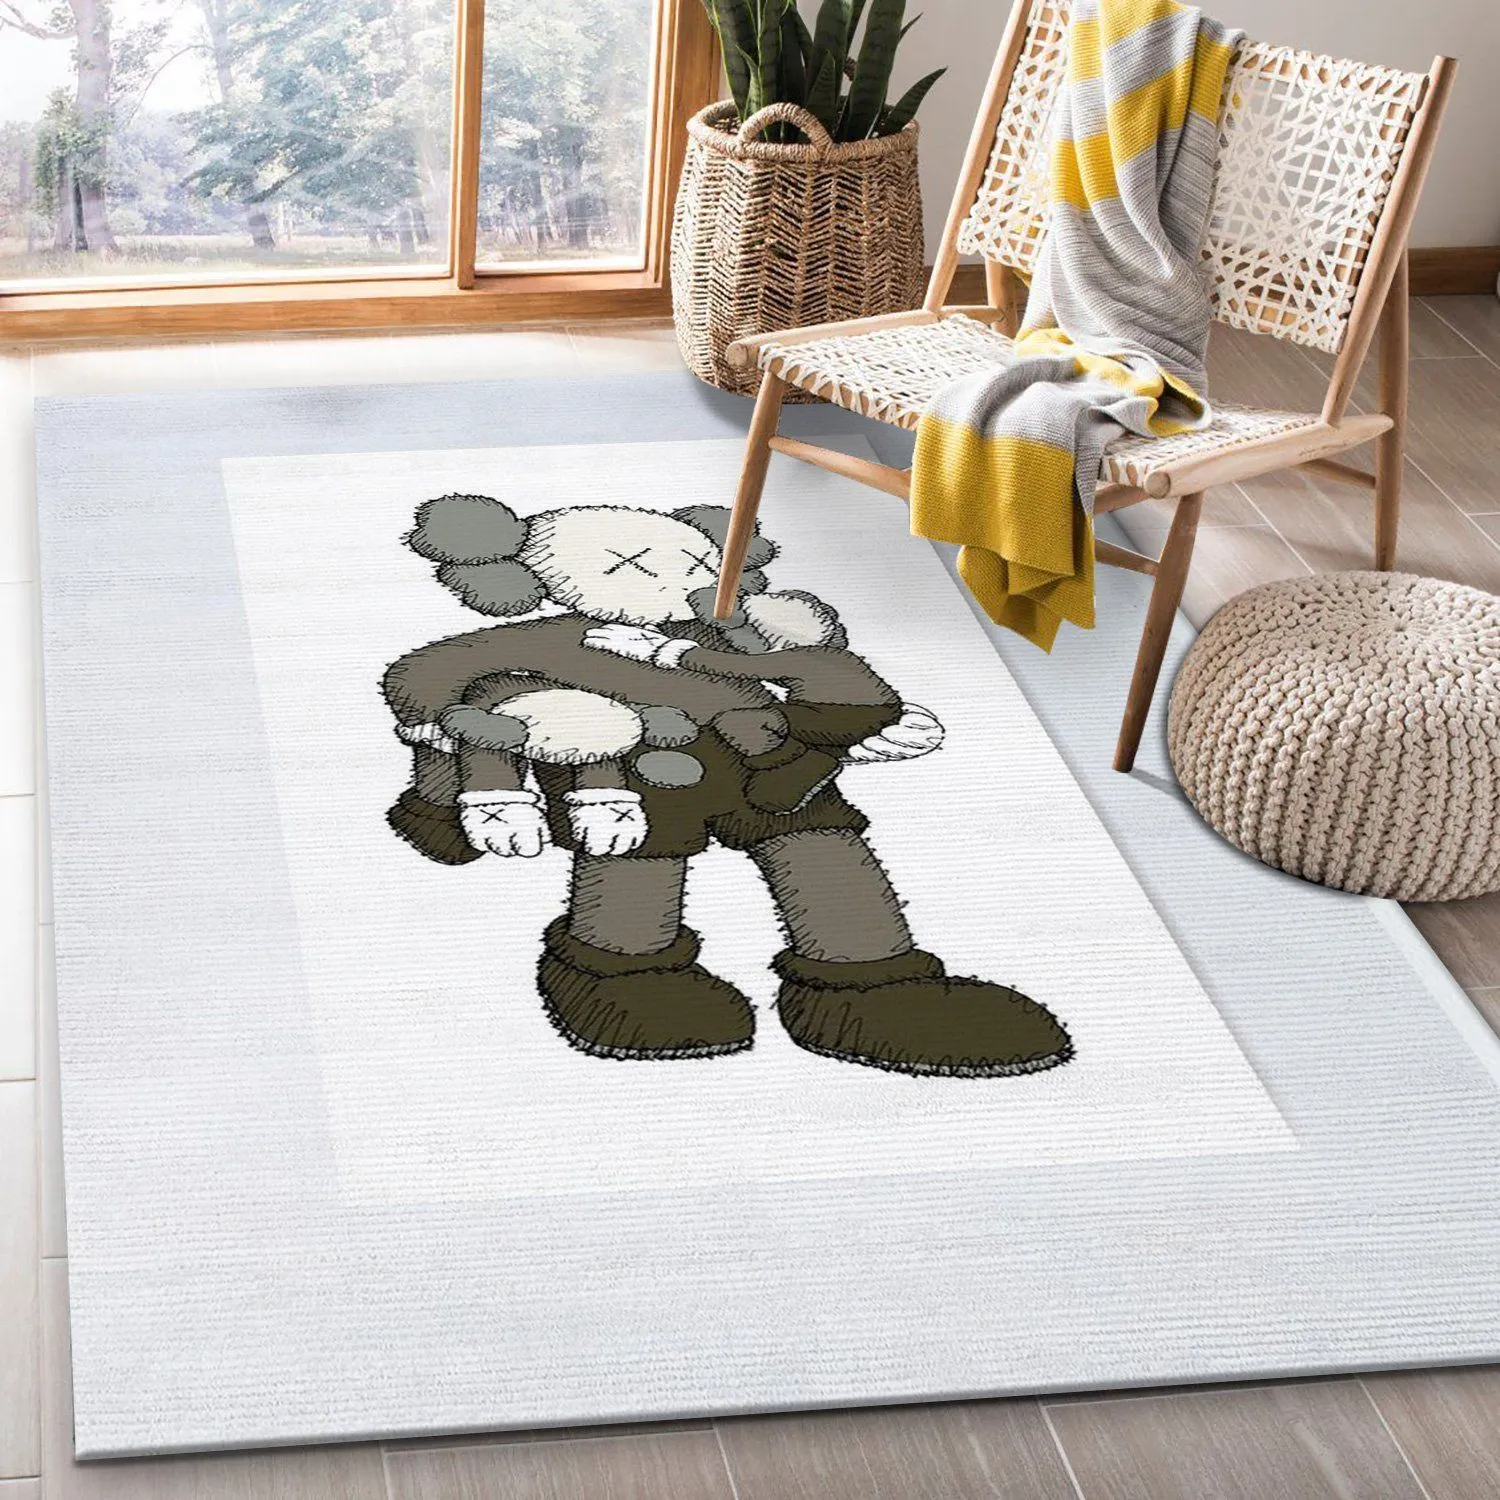 Baby kaws Rectangle Rug Area Carpet Home Decor Fashion Brand Door Mat Luxury